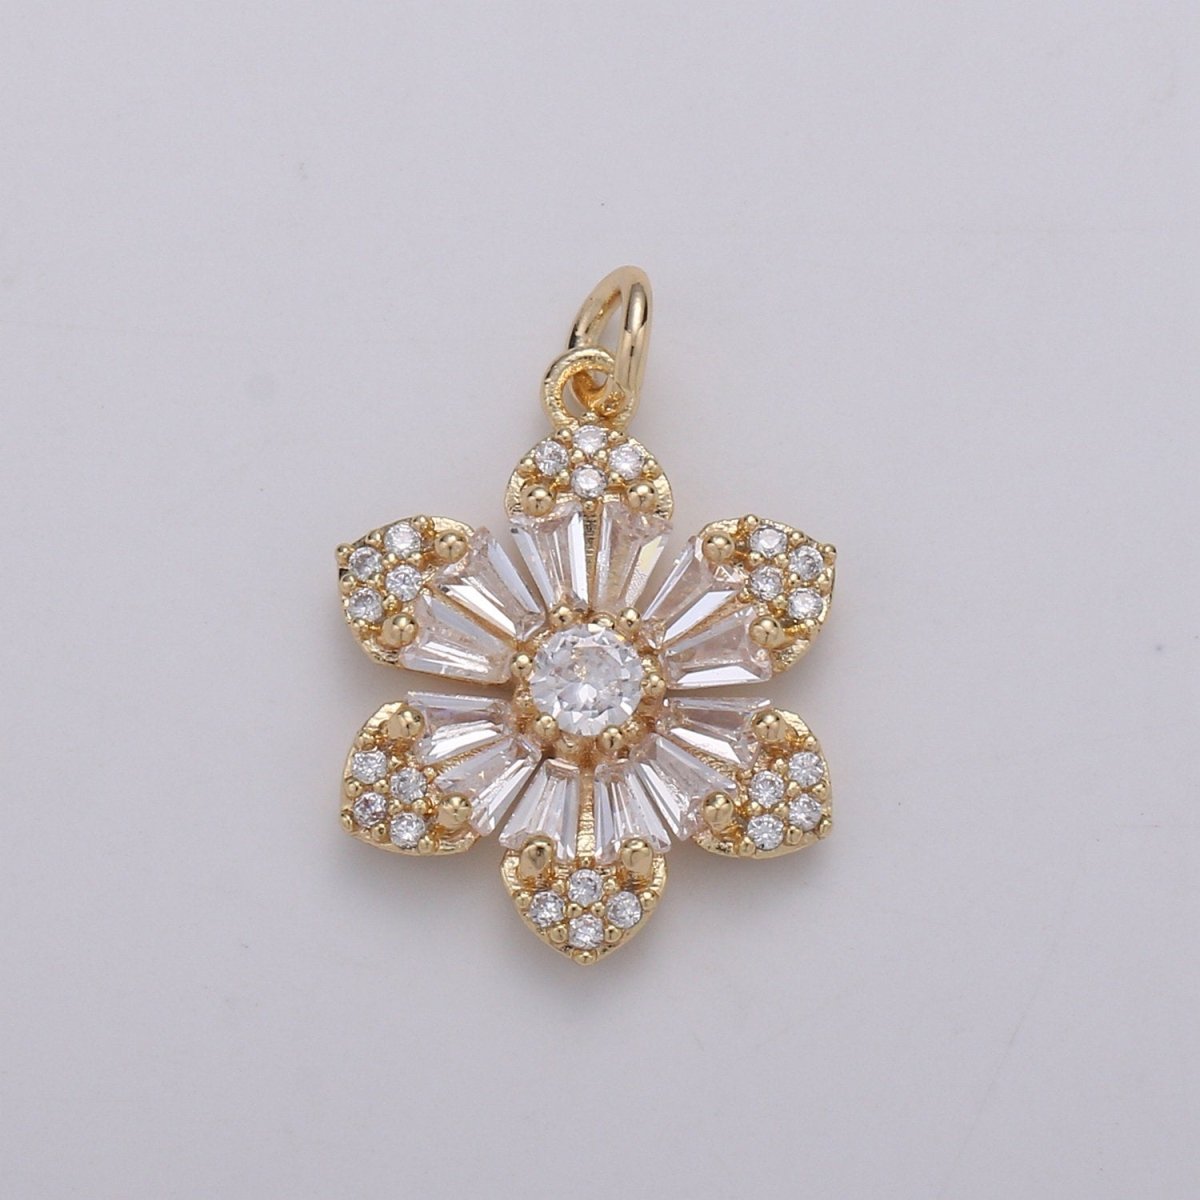 Baguette CZ Daisy 24K Gold Plated, Jasmine Cluster Cubic Charm, Dainty Flower Pendant Dainty Charm for bracelet earring necklace supply E-559 - DLUXCA